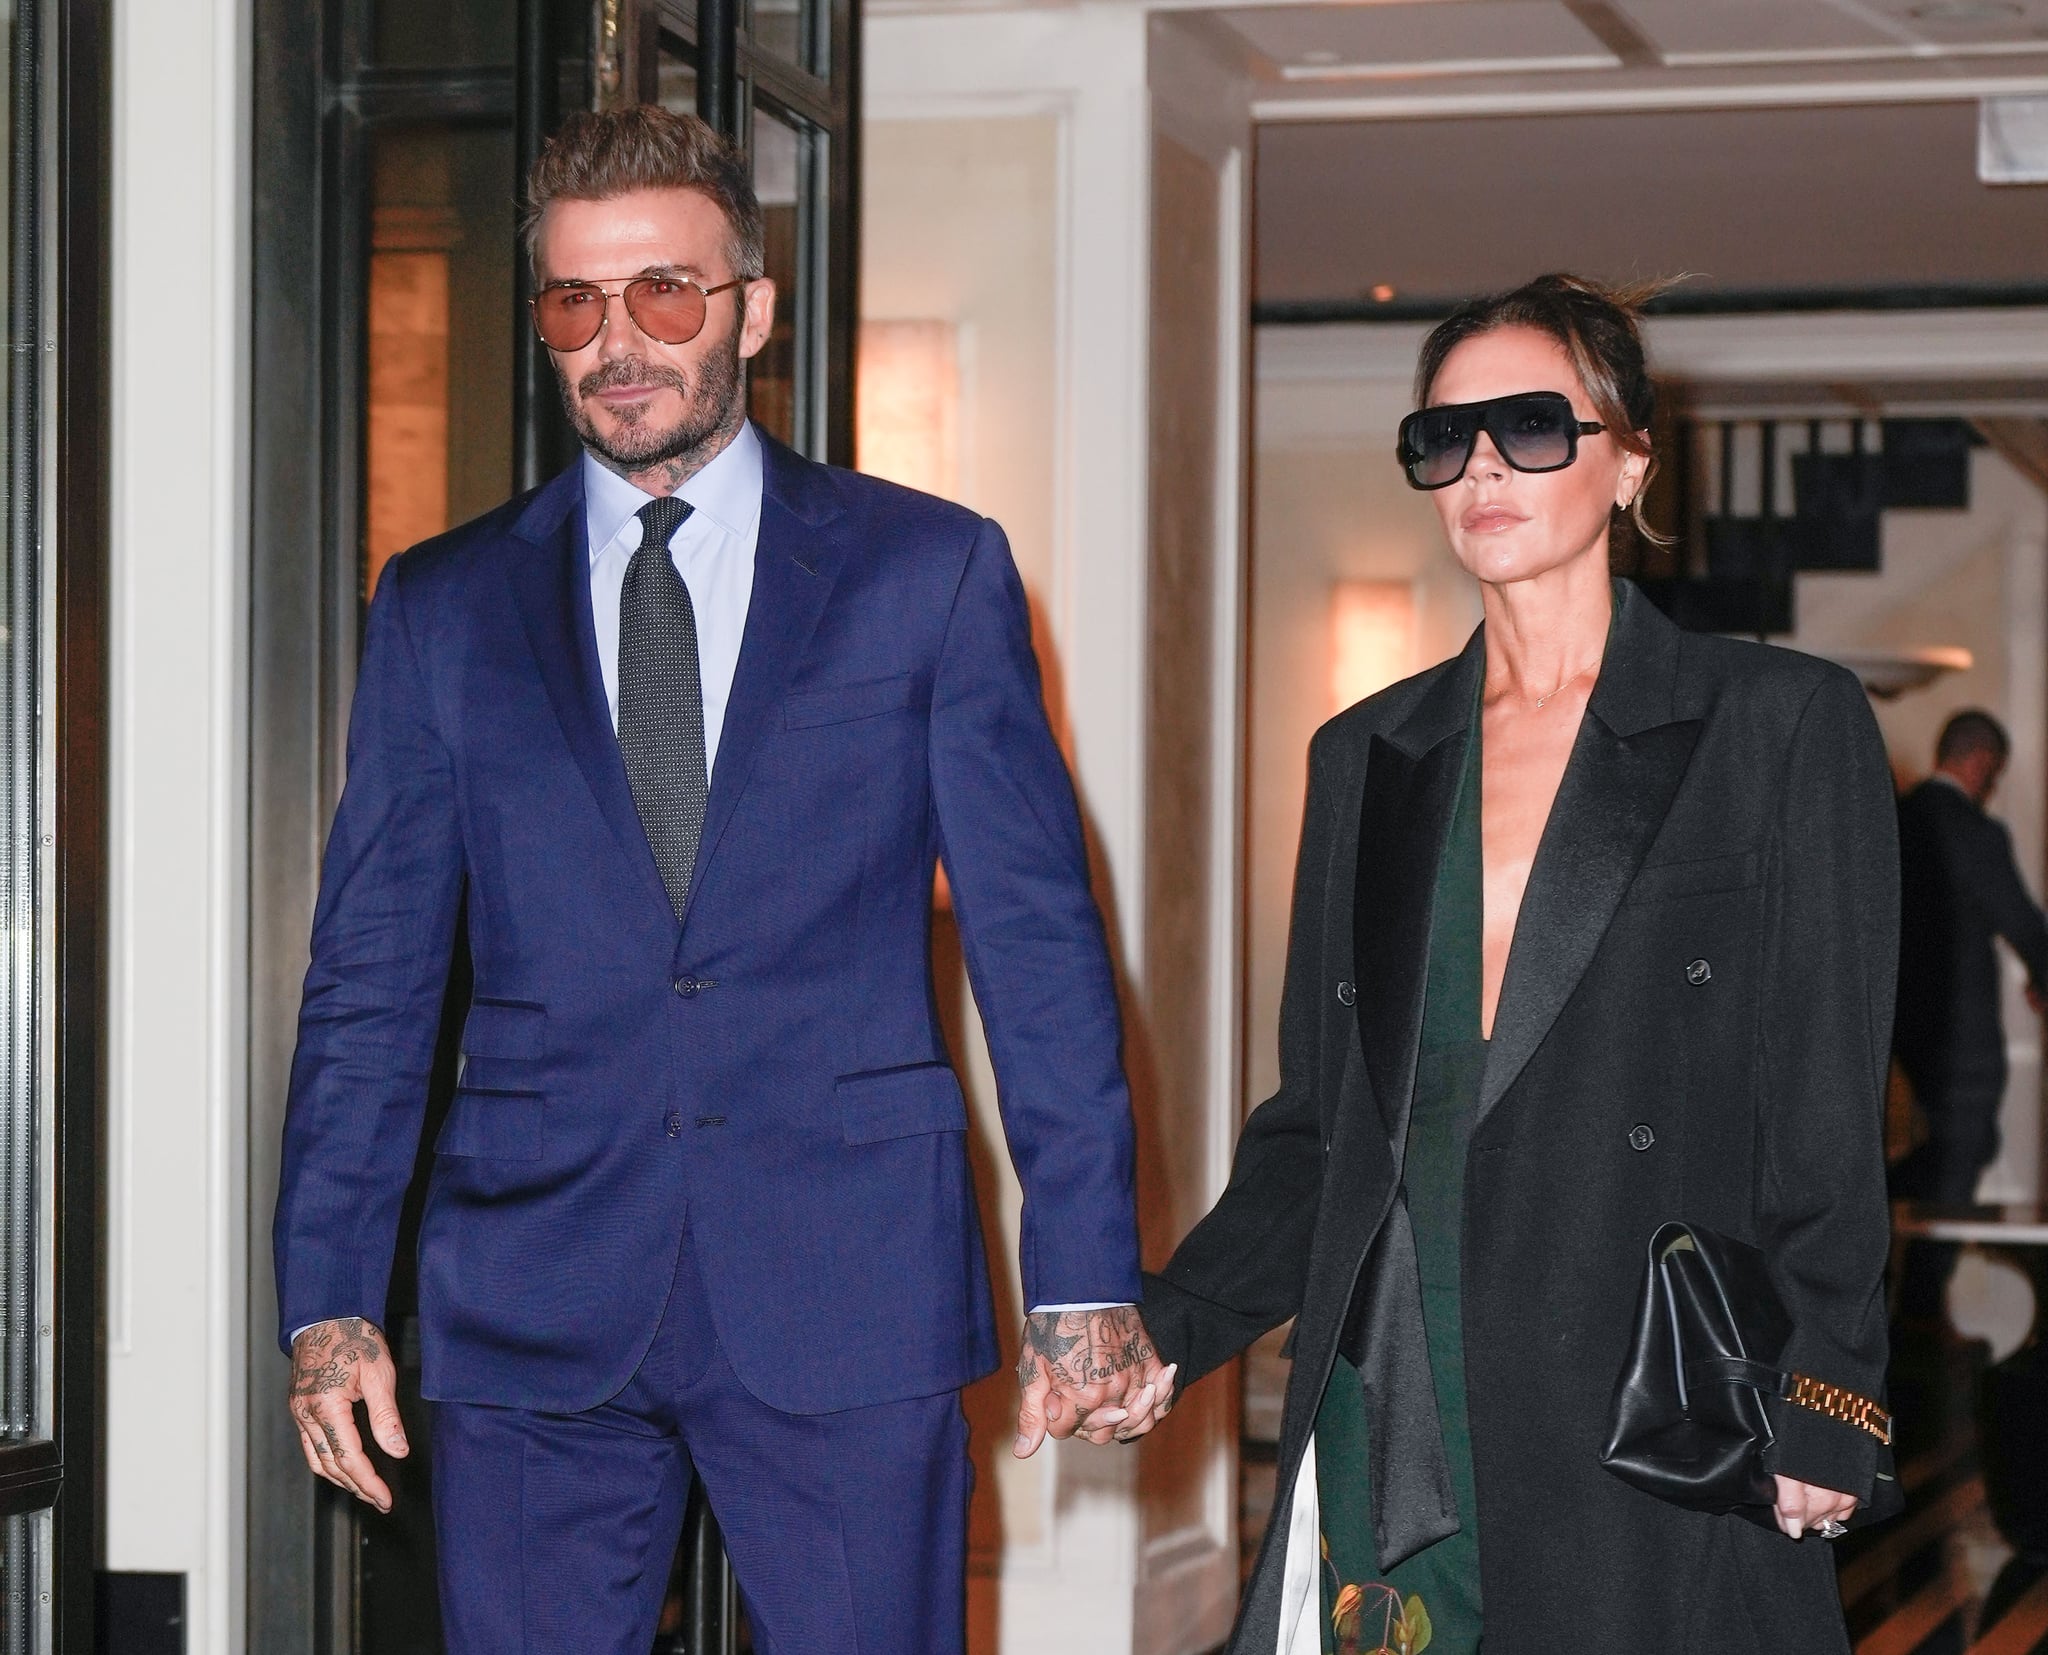 NEW YORK, NEW YORK - OCTOBER 11: David Beckham and Victoria Beckham are seen on October 11, 2022 in New York City. (Photo by Gotham/GC Images)